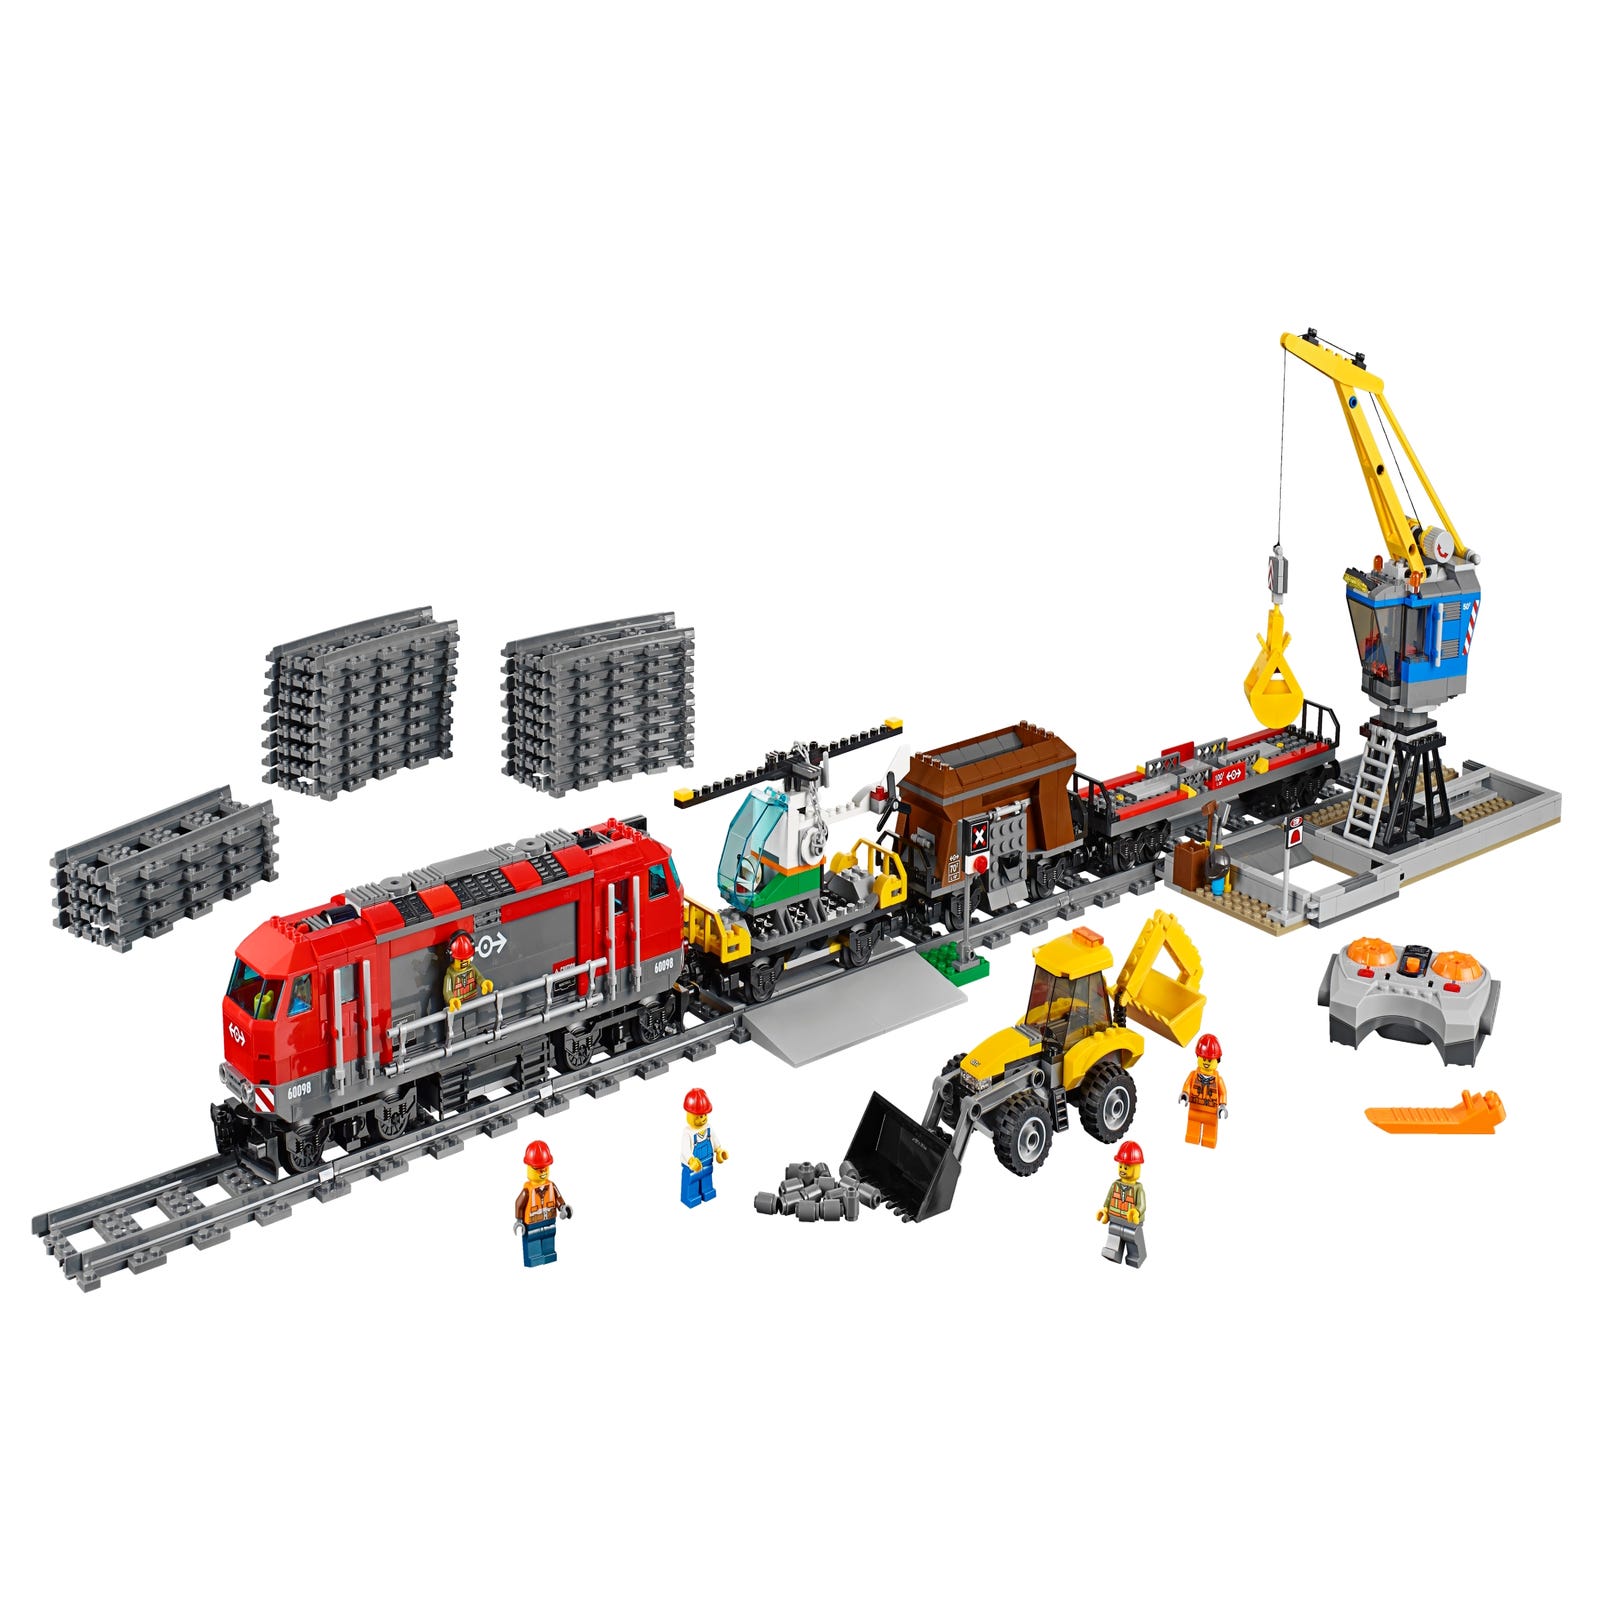 Tog tungt gods 60098 | City | LEGO® DK